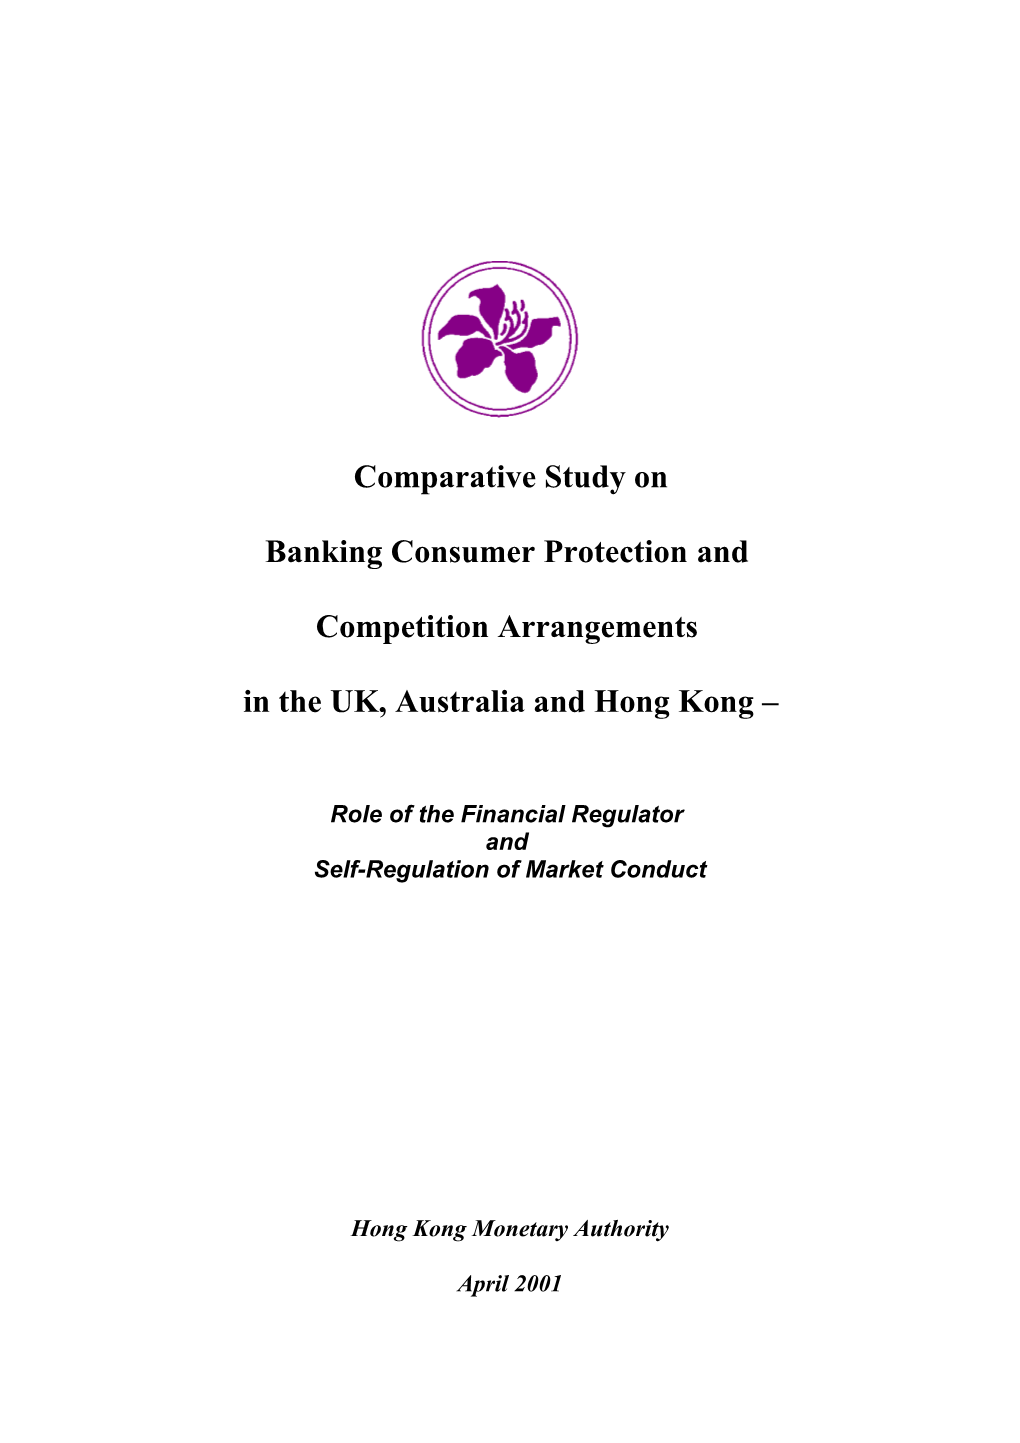 General Framework for Consumer Protection